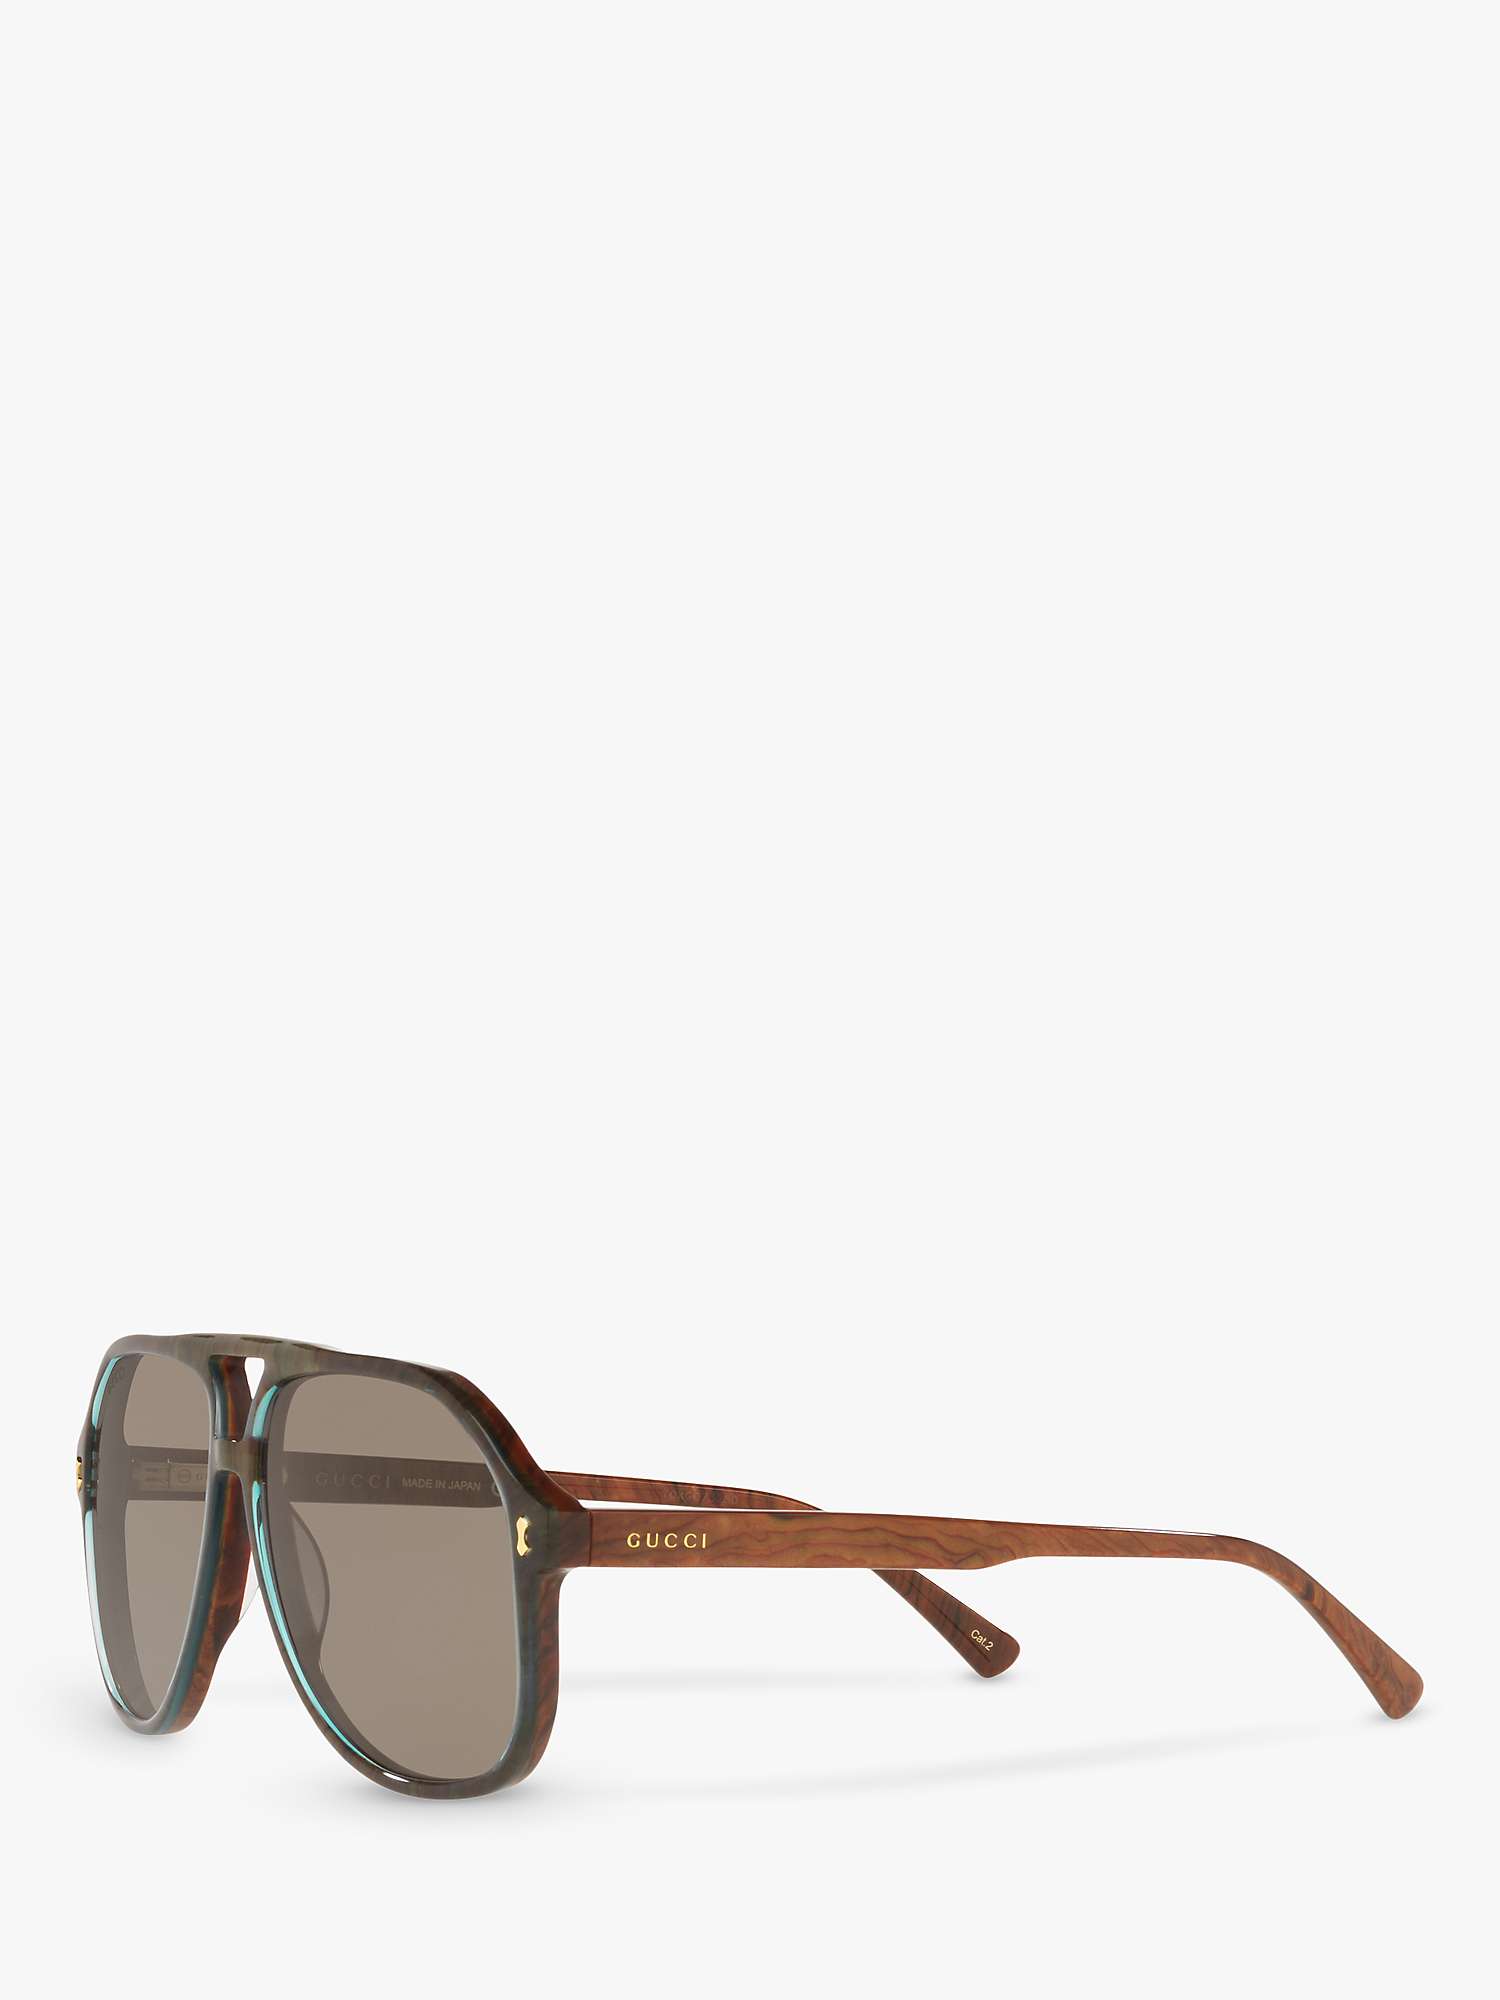 Buy Gucci GG1042S Men's Aviator Sunglasses, Blue Brown/Grey Online at johnlewis.com